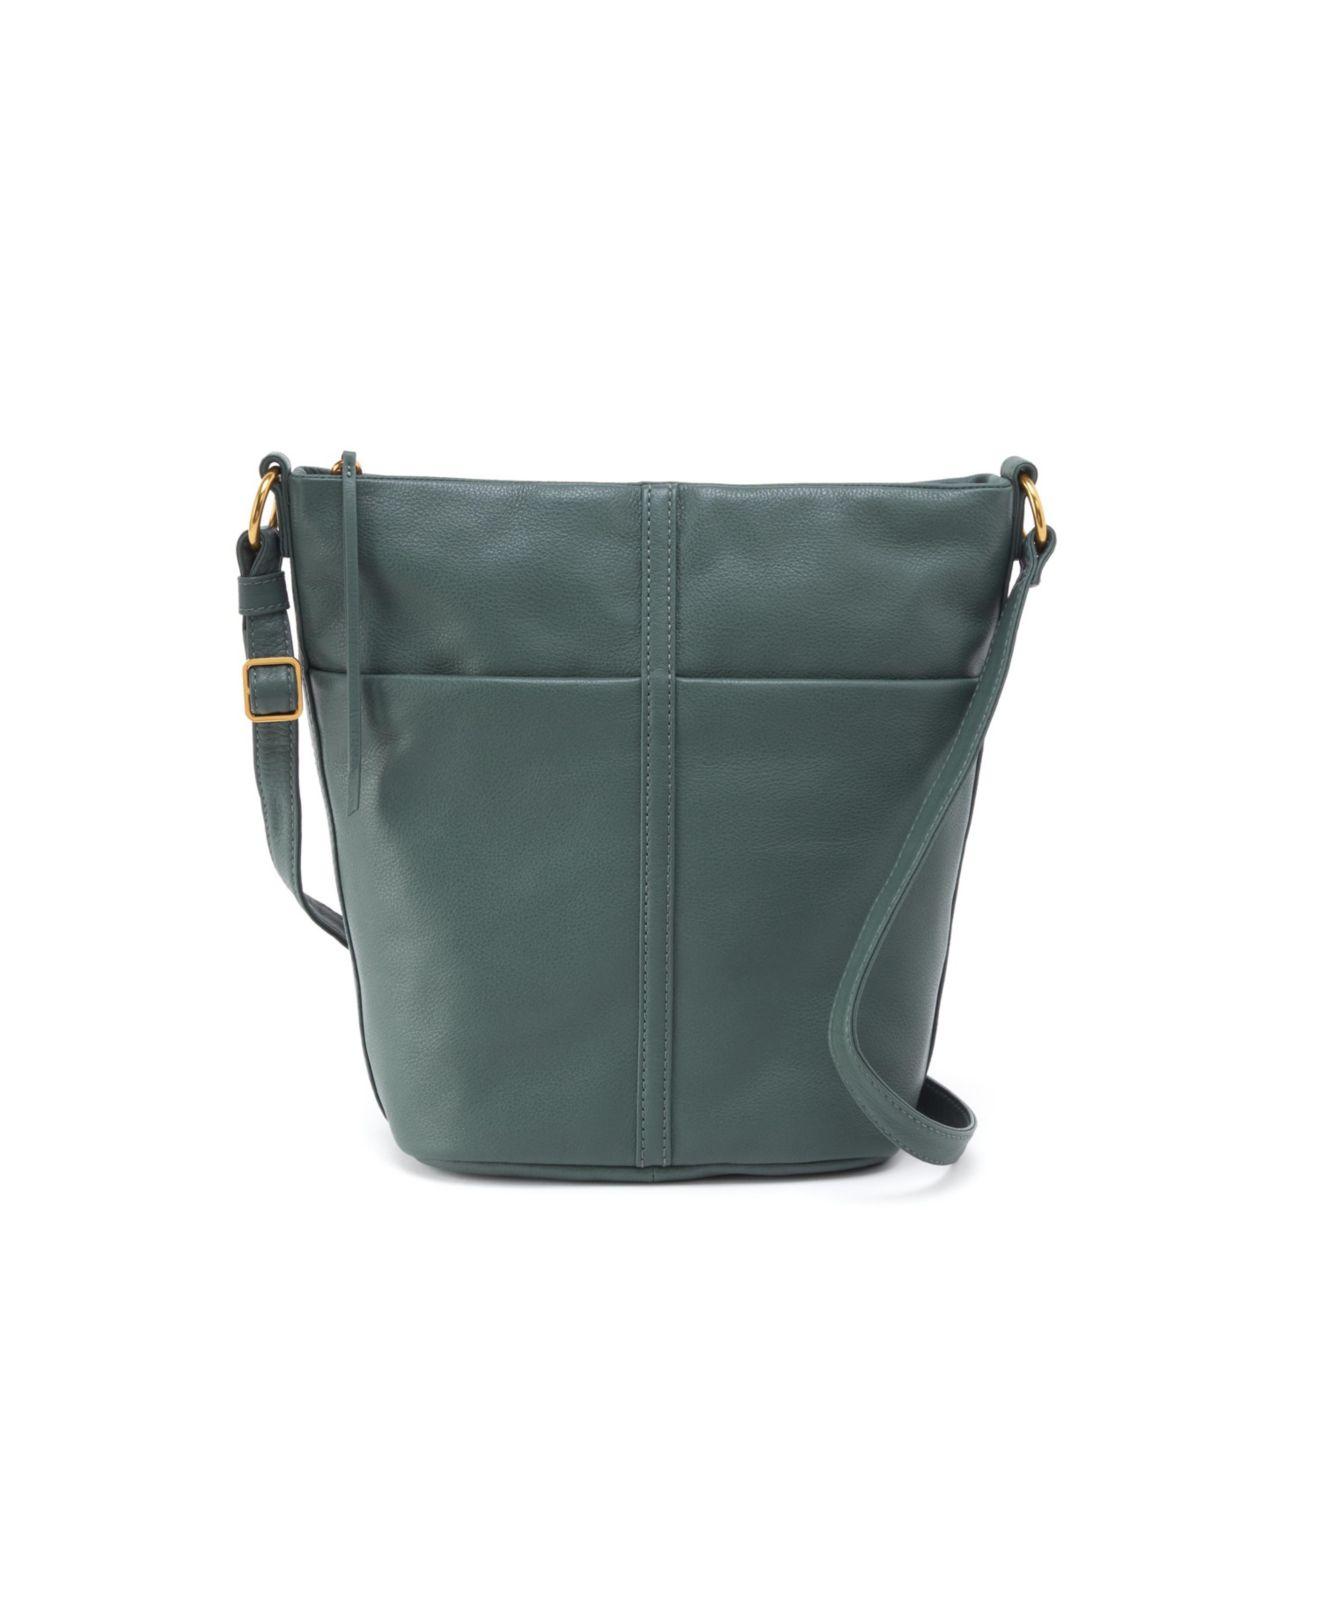 Hobo International Fern Bucket Crossbody Bag in Green | Lyst